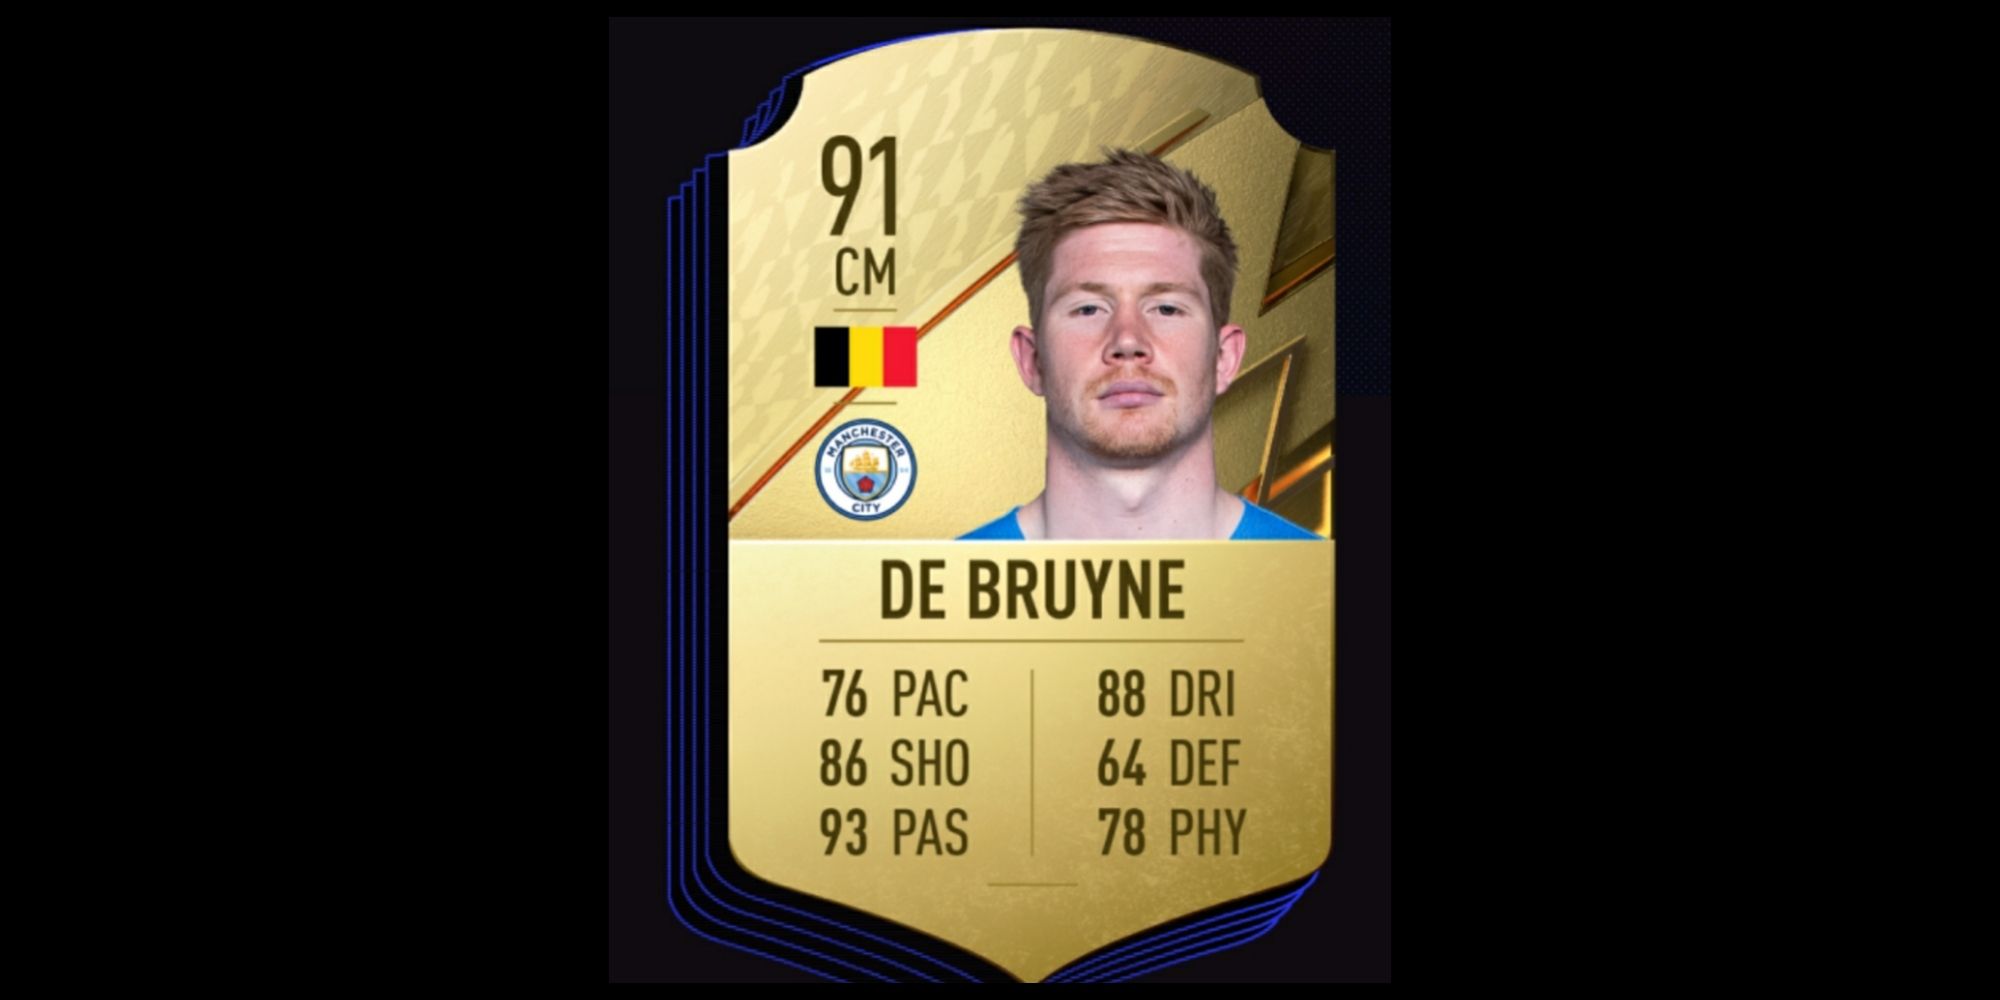 De Bruyne card in FIFA 22